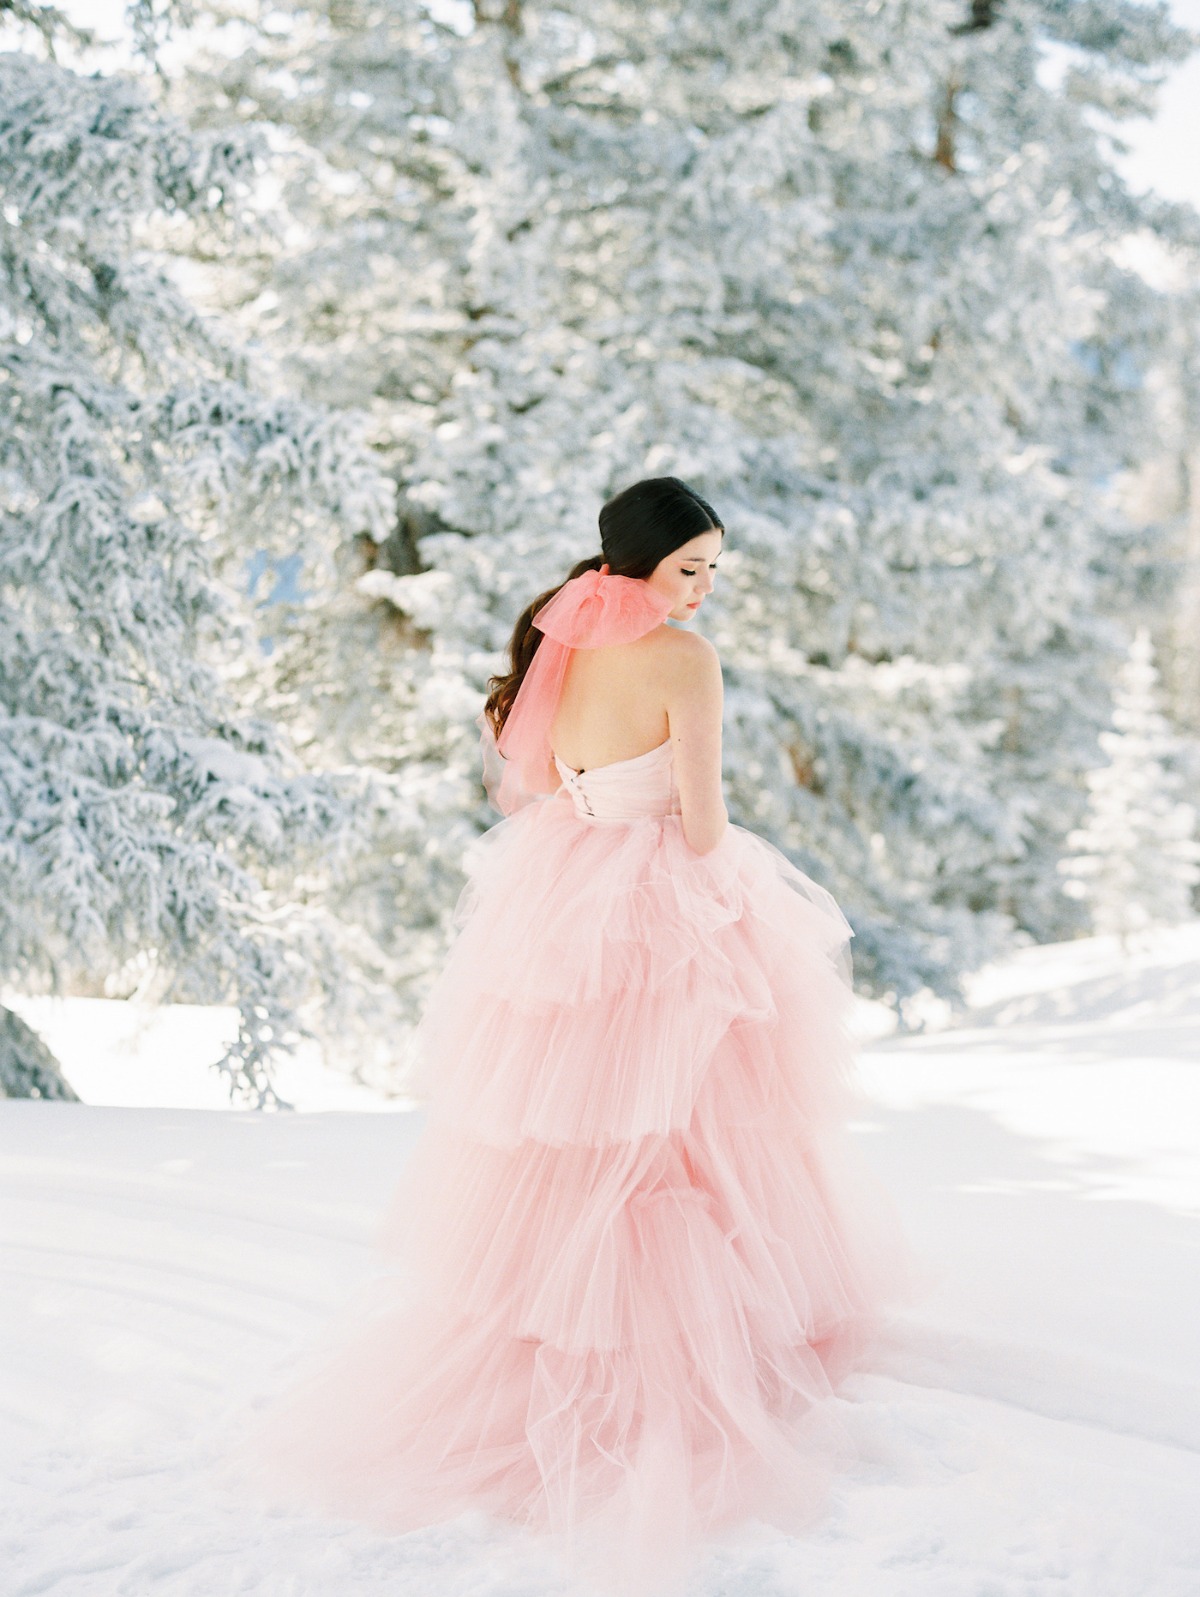 Claire LaFaye wedding gown captured in Aspen